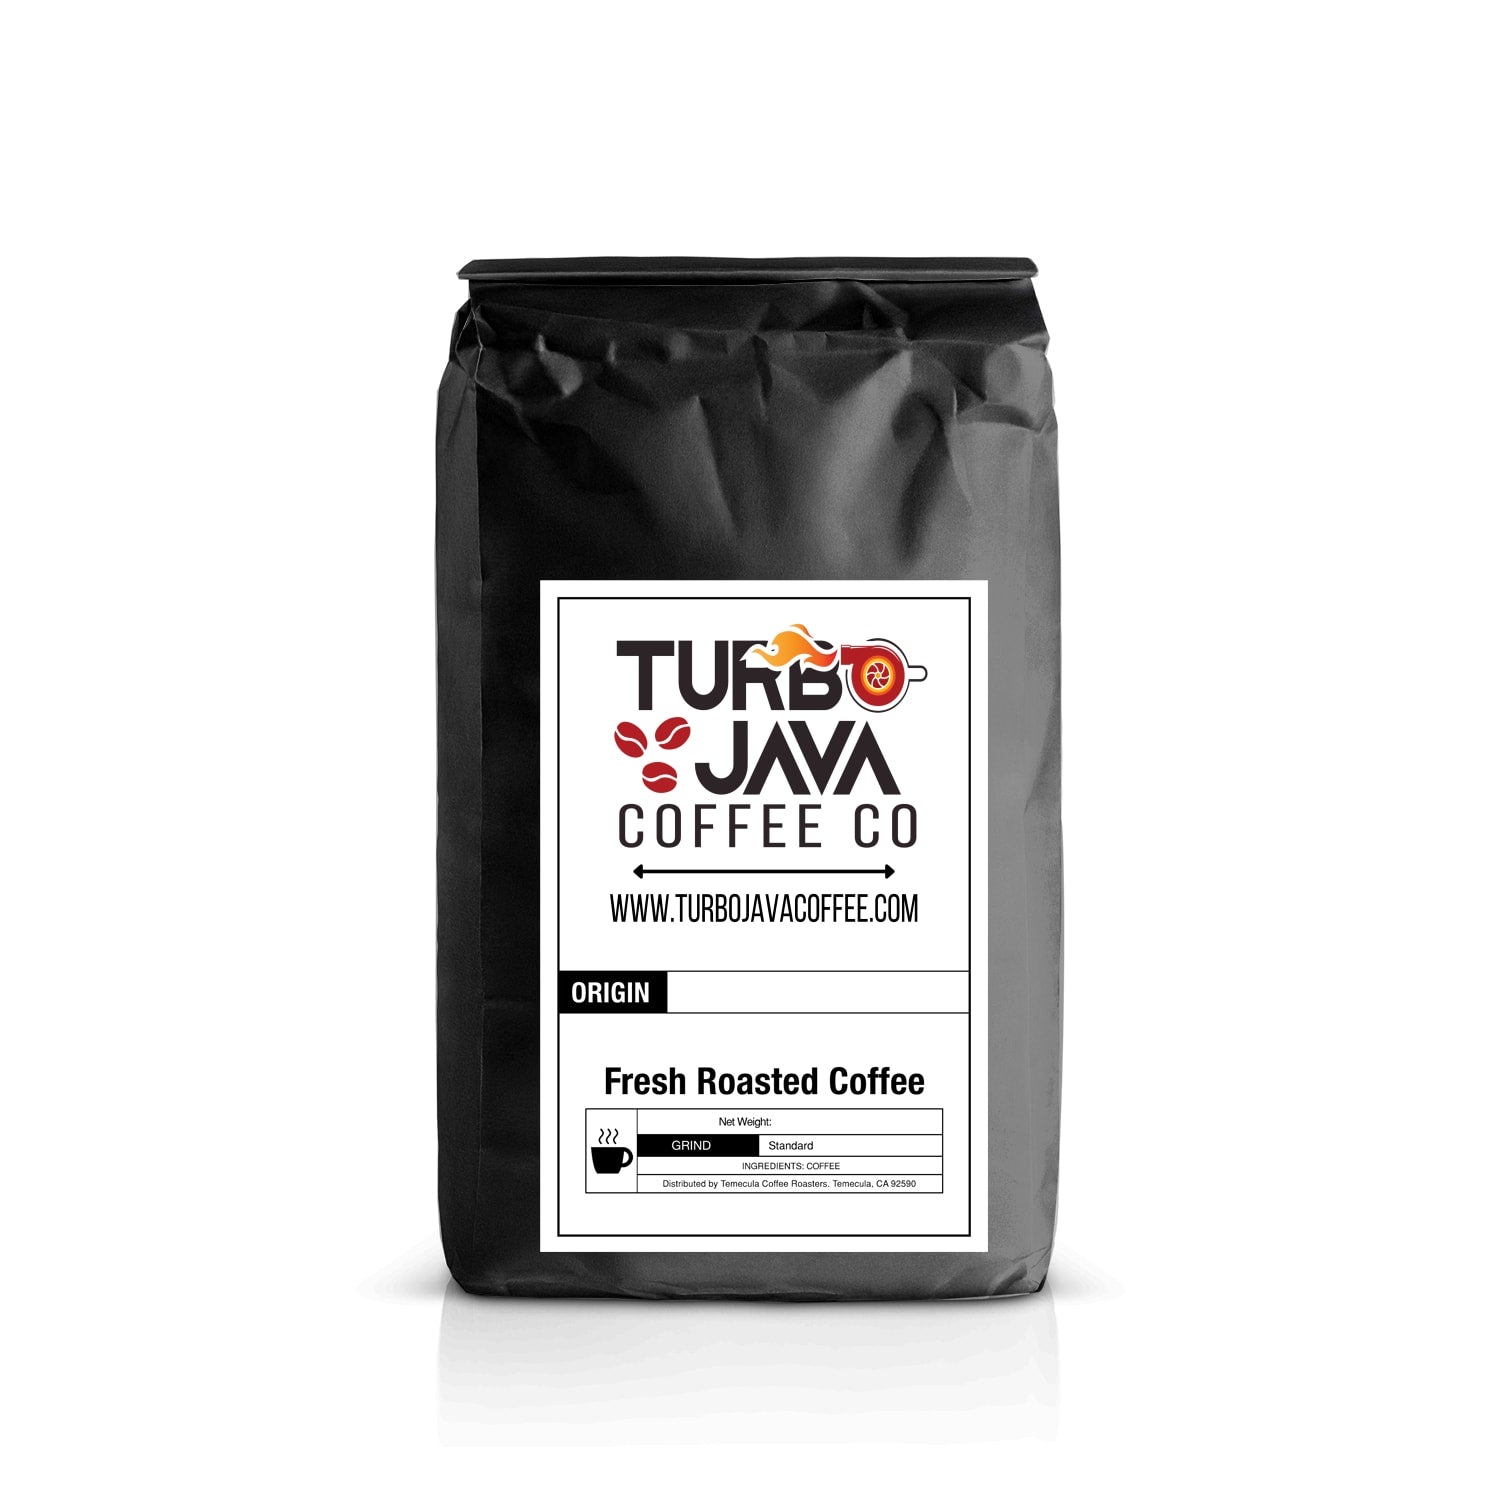 Turbo Java Coffee Co. Cold Brew Coffee Coffee 12 oz / Standard,12 oz / Coarse,12 oz / Espresso,12 oz / Whole Bean,1 lb / Standard,1 lb / Coarse,1 lb / Espresso,1 lb / Whole Bean,2 lb / Standard,2 lb / Coarse,2 lb / Espresso,2 lb / Whole Bean,5 lb / Standard,5 lb / Coarse,5 lb / Espresso,5 lb / Whole Bean,12 lb / Standard,12 lb / Coarse,12 lb / Espresso,12 lb / Whole Bean